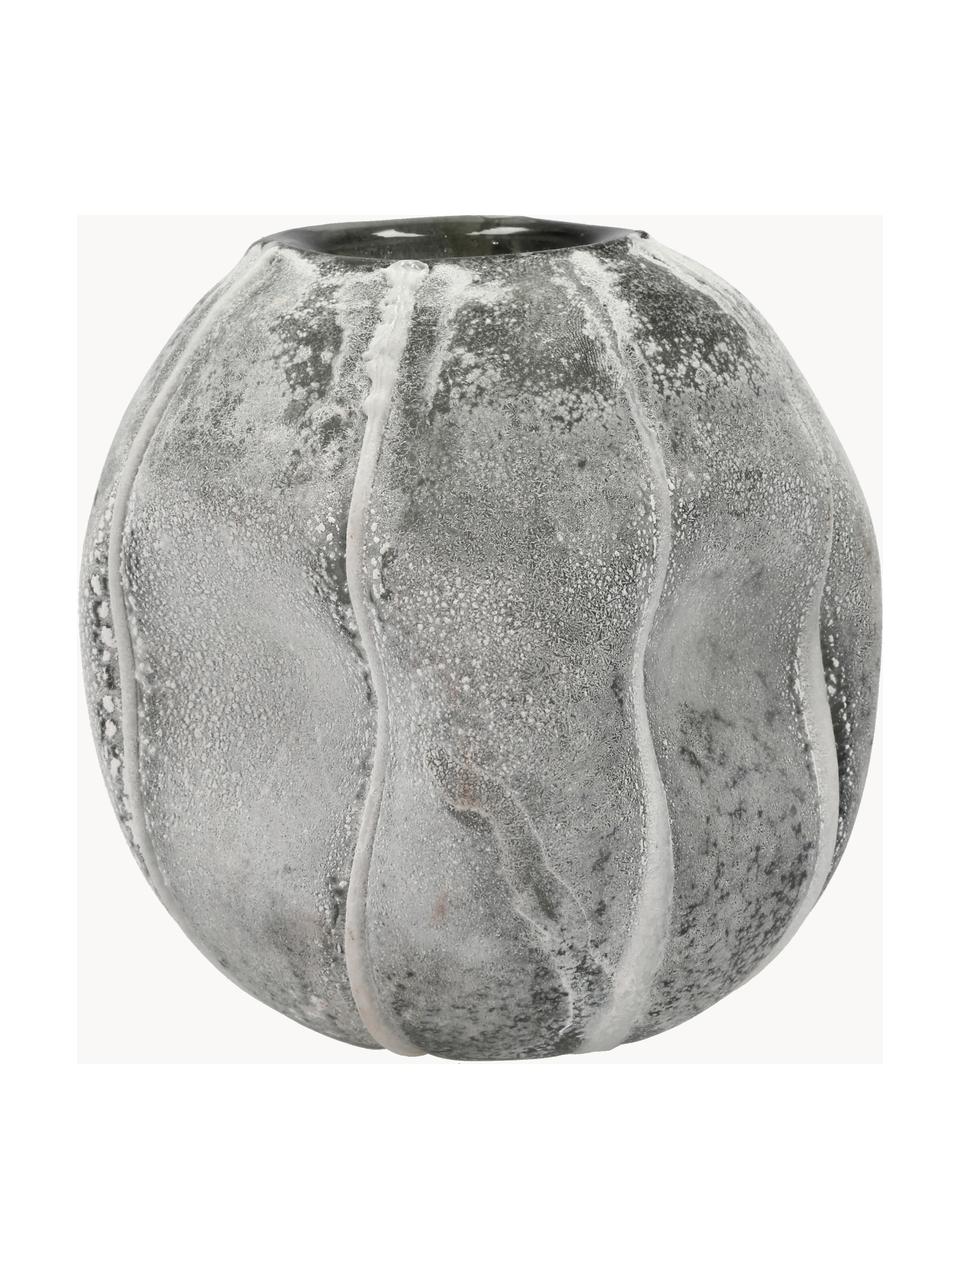 Glas-Vase Westwing Form, organischer Sigt in | cm 13 H